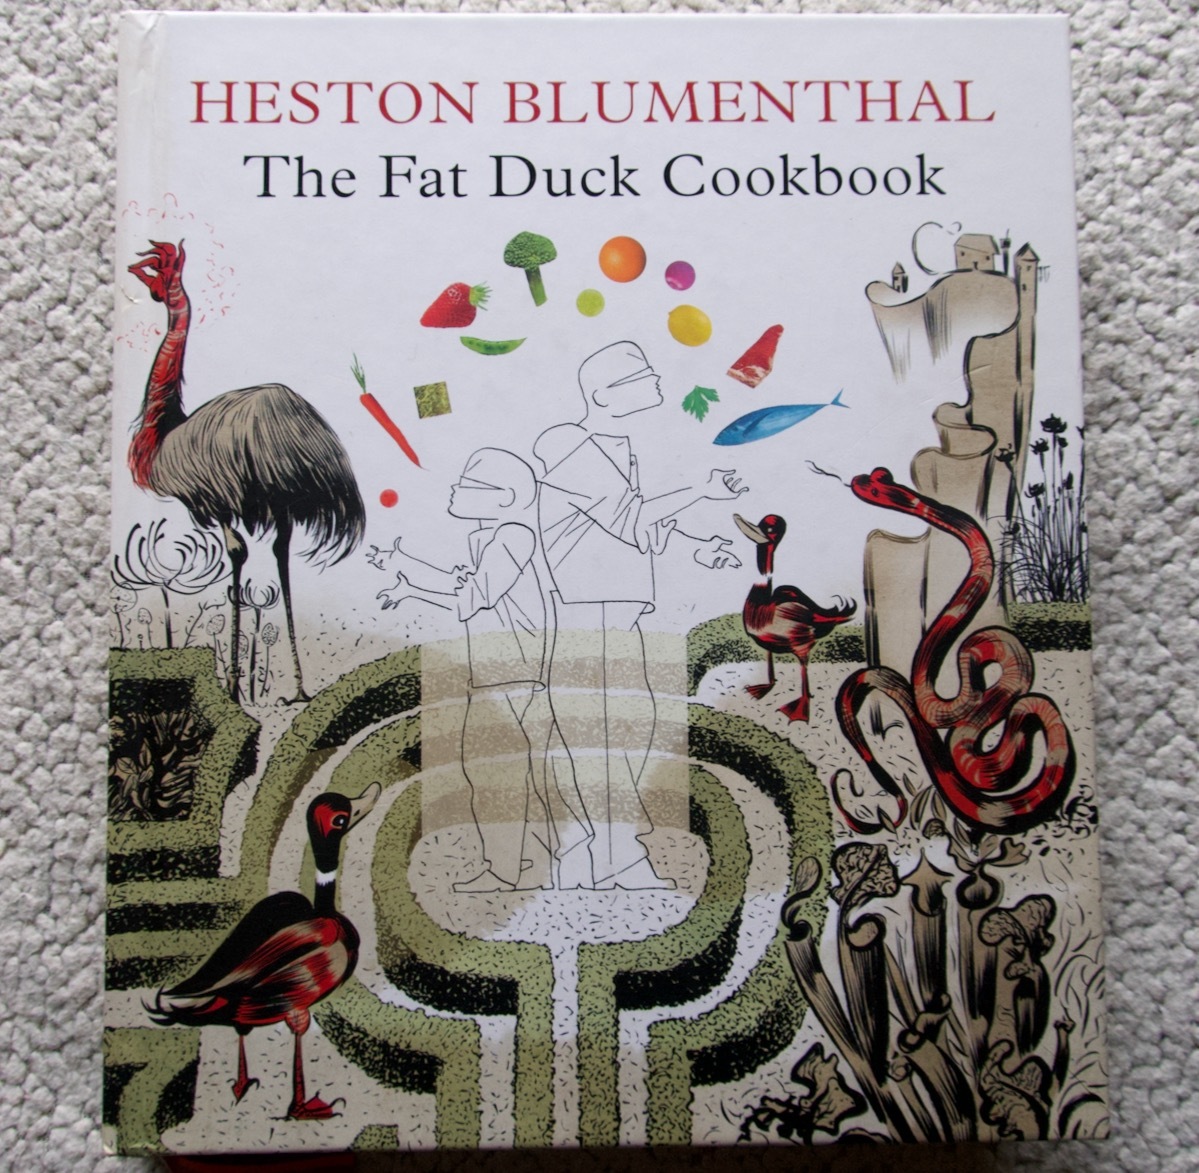 The Fat Duck Cookbook (Bloomsbury) Heston Blumenthal 洋書 ファット・ダック ヘストンブルーメンタール☆